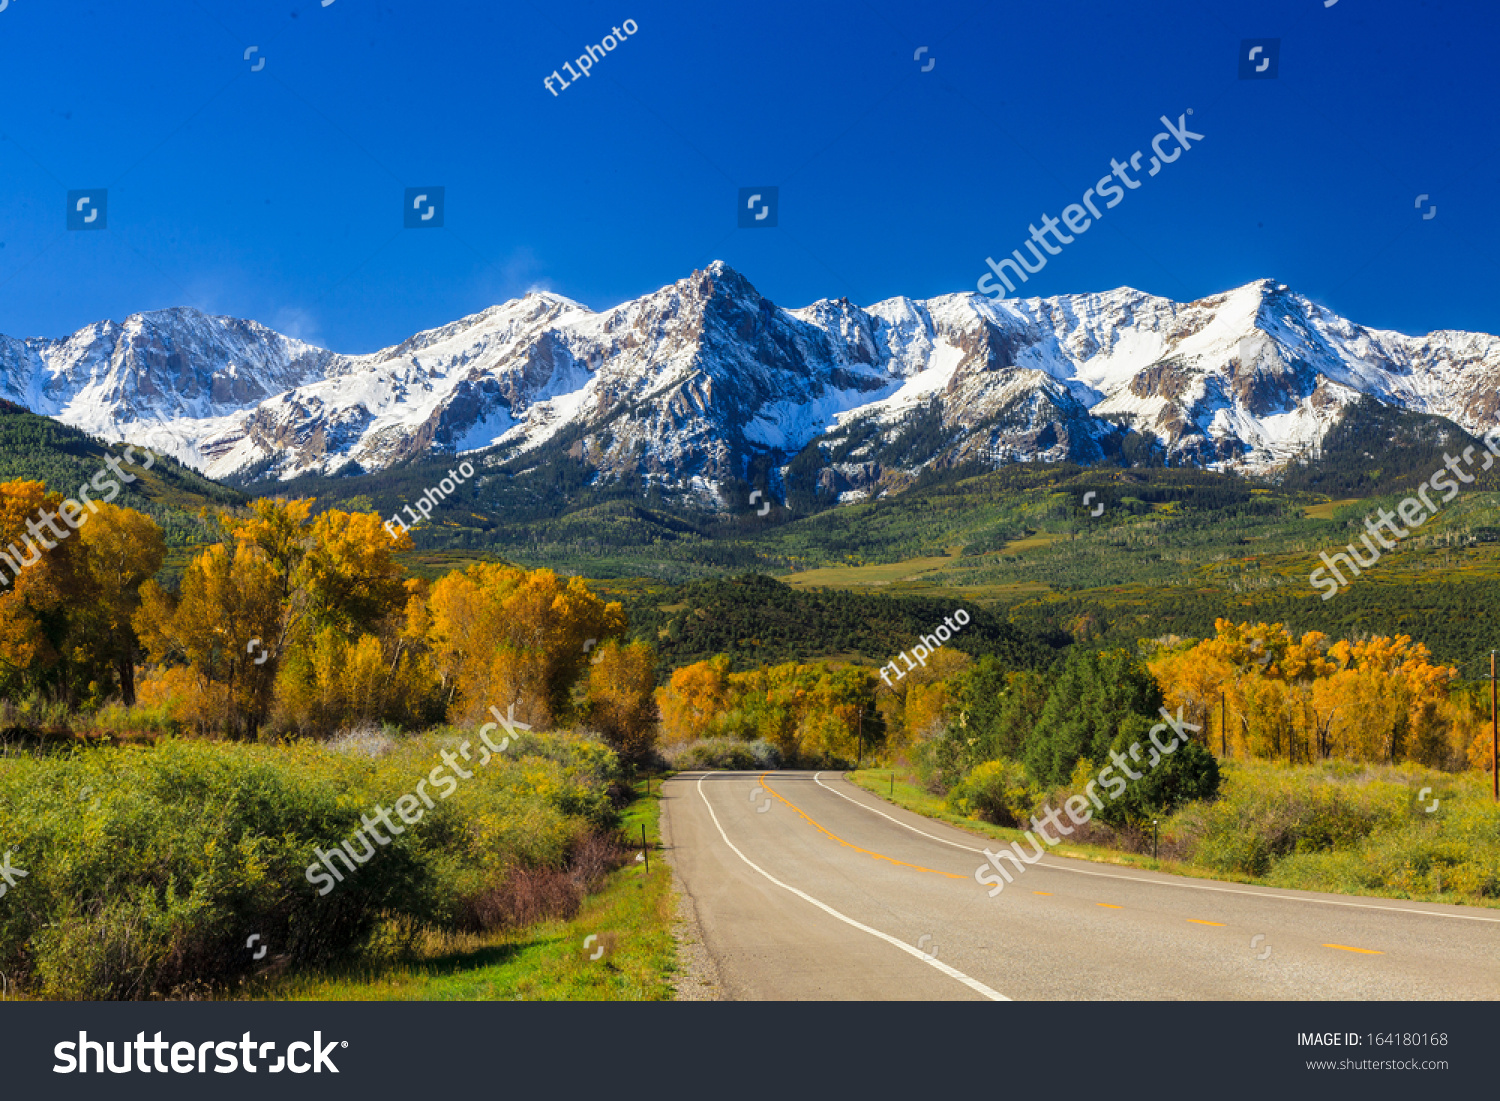 Countryside road, fall season in Colorado #164180168